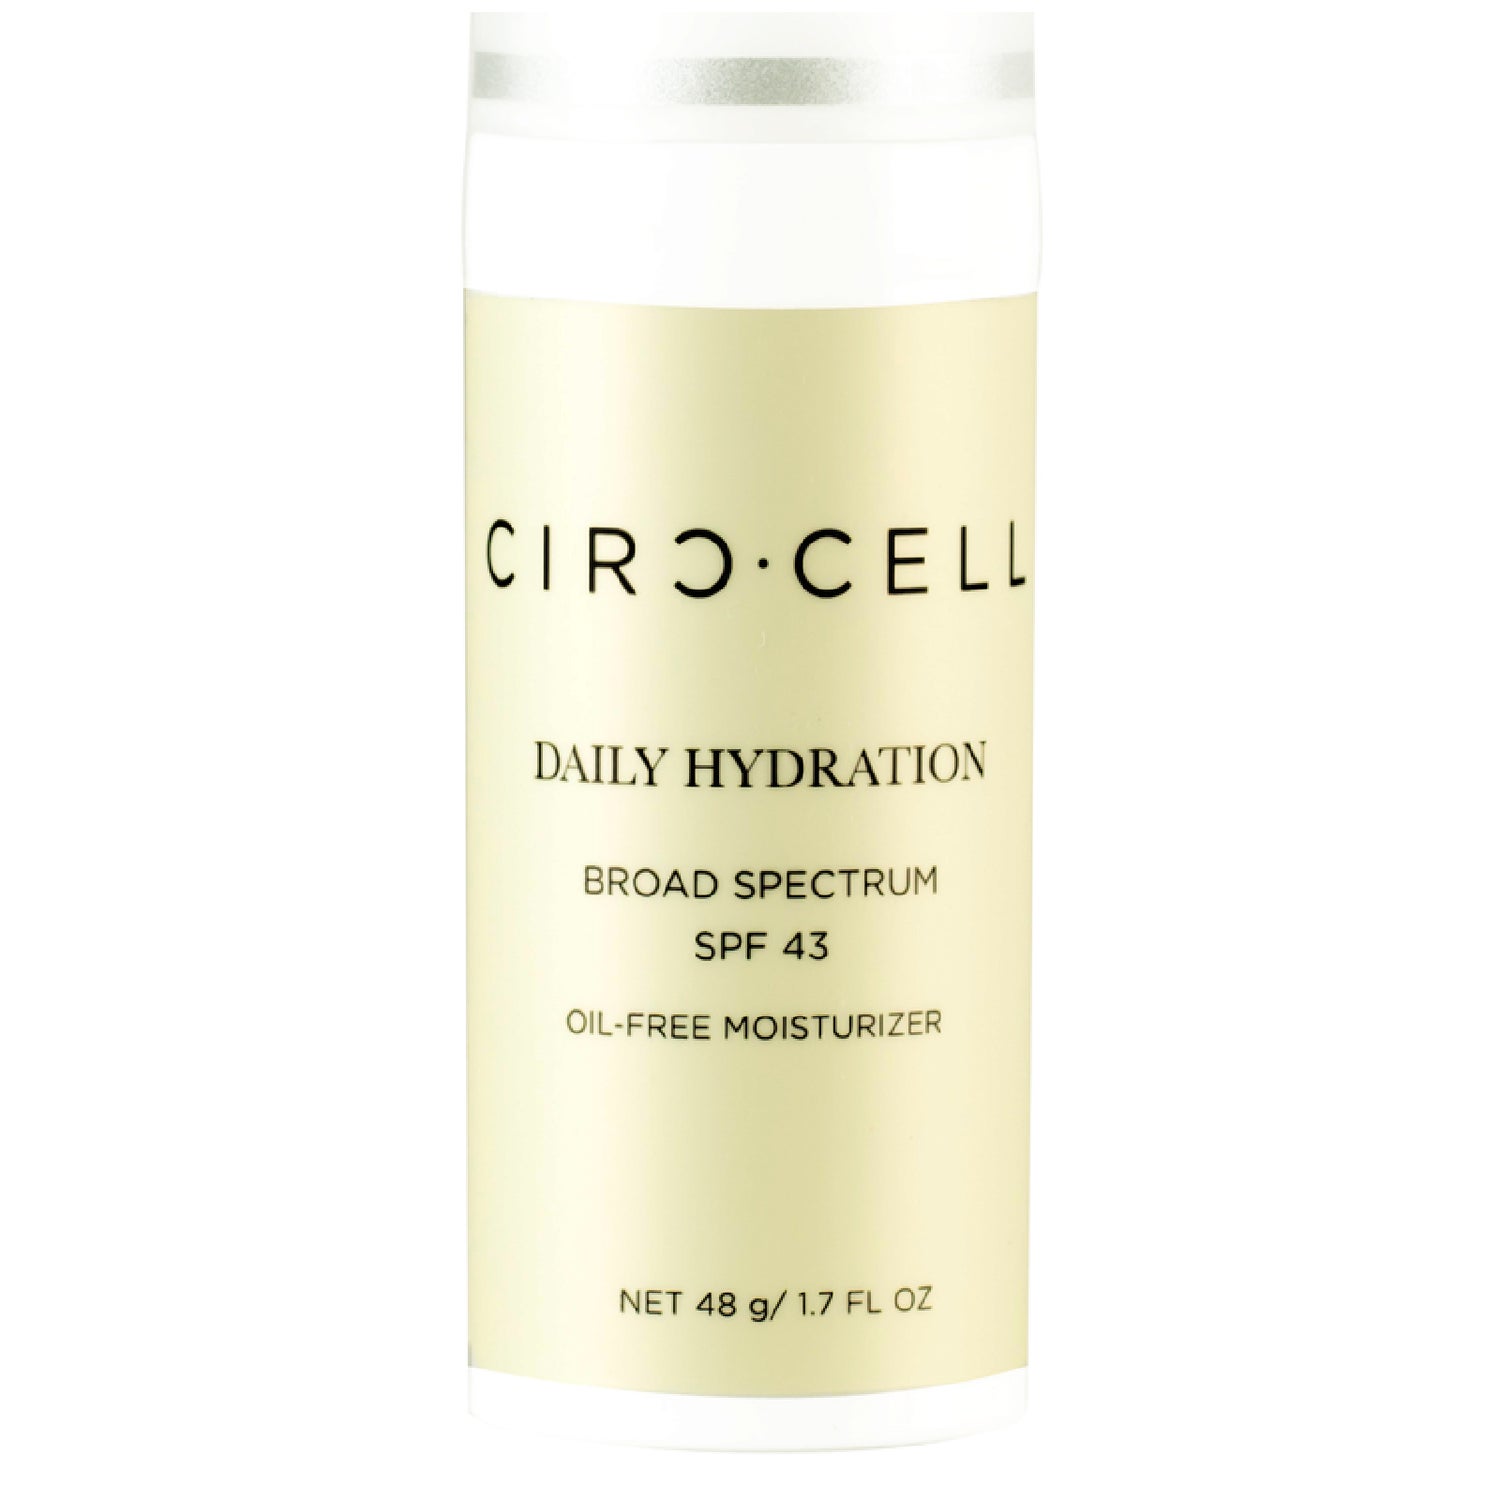 Circ-Cell Daily Hydration Broad Spectrum SPF 43 Oil-Free Moisturiser